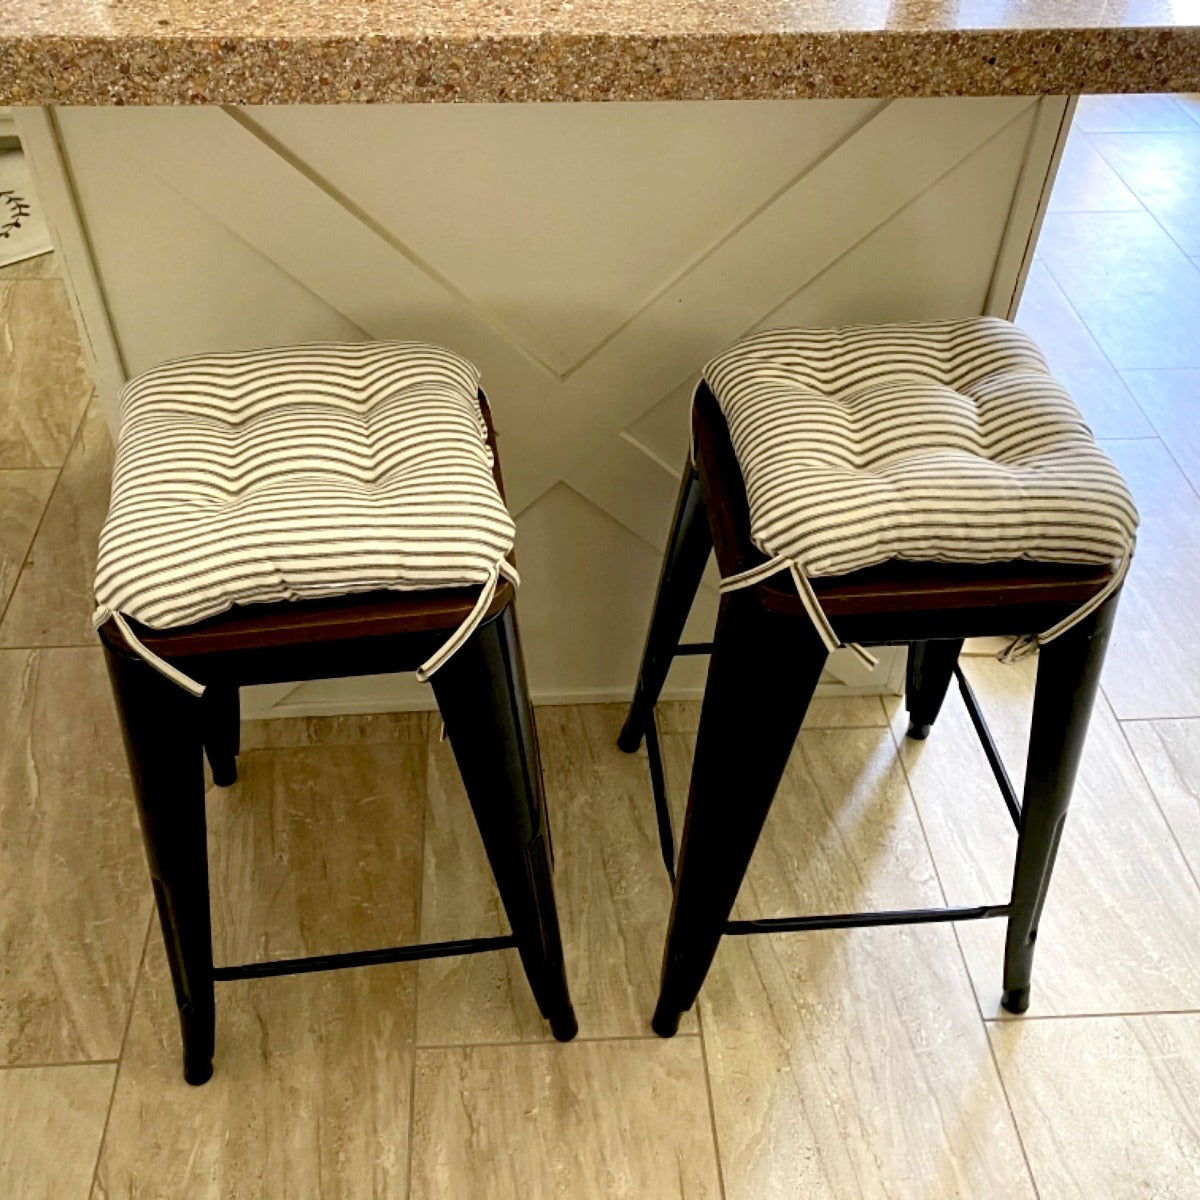 Ticking Stripe Black Saddle Stool Cushions - Gaucho Stool - Satori Seat Cushions